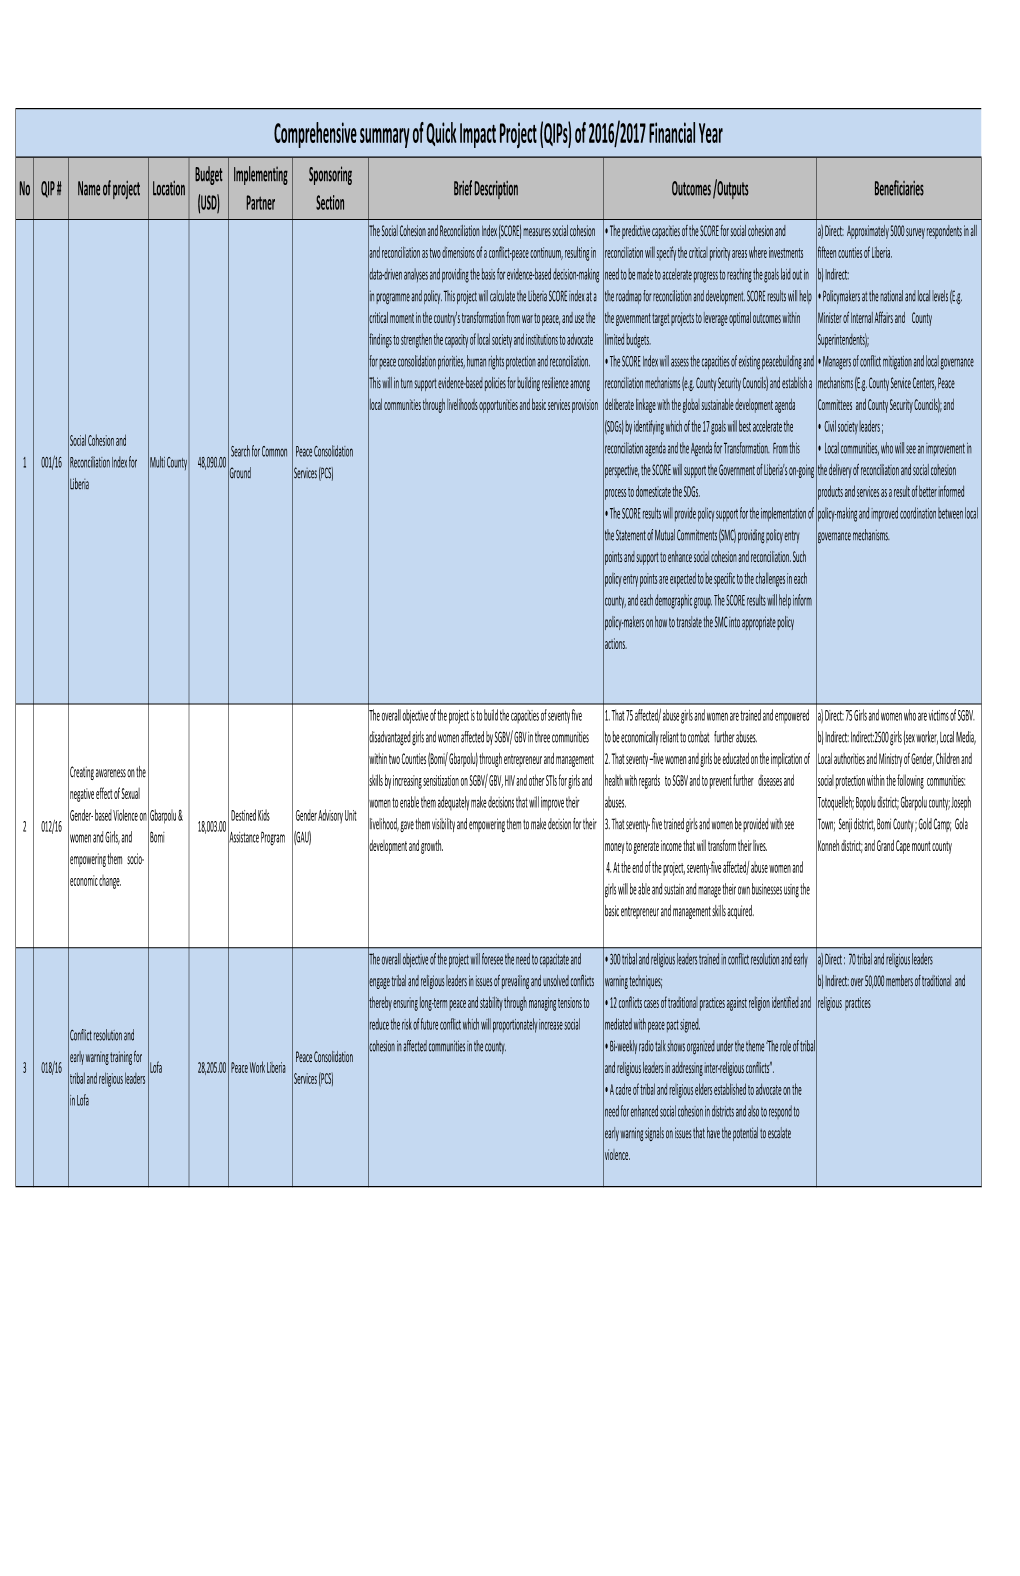 Copy of Comprehensive Summary of UNMIL's Qips 2016-2017.Xlsx